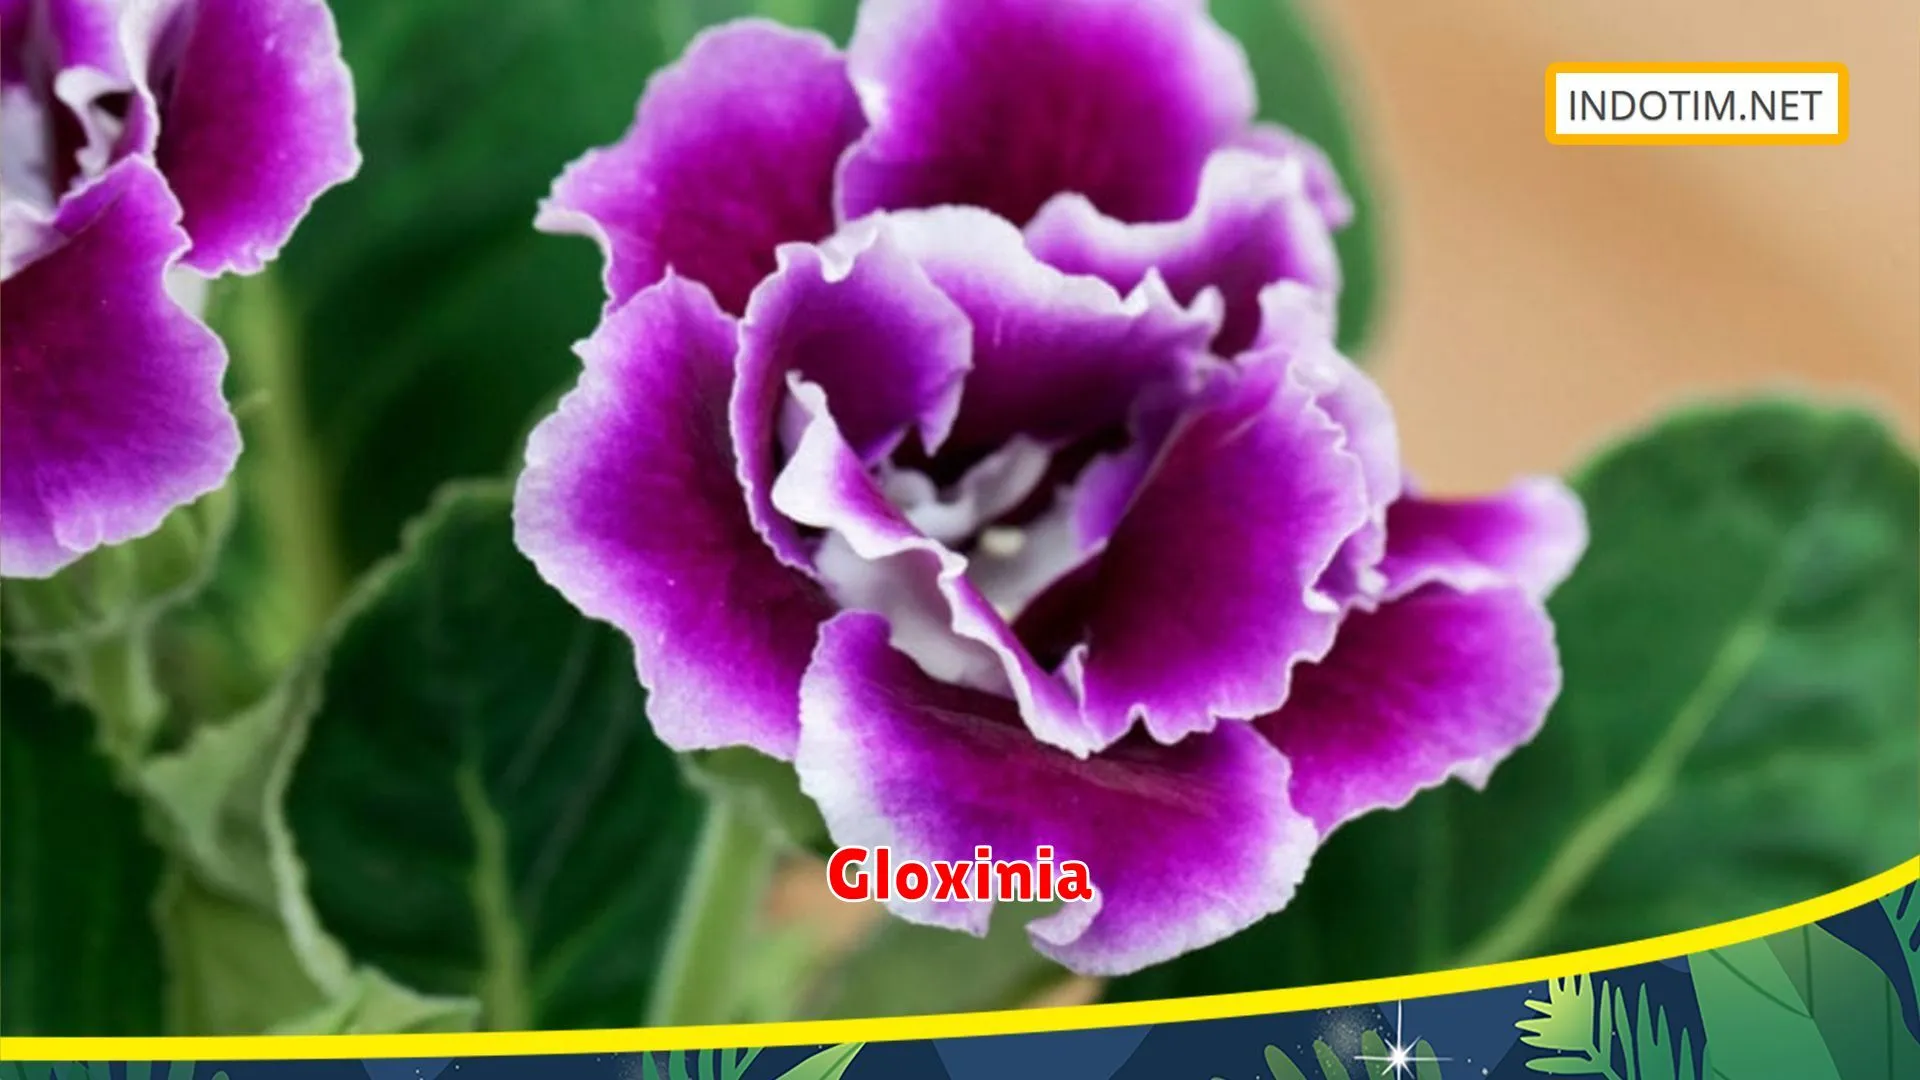 Gloxinia